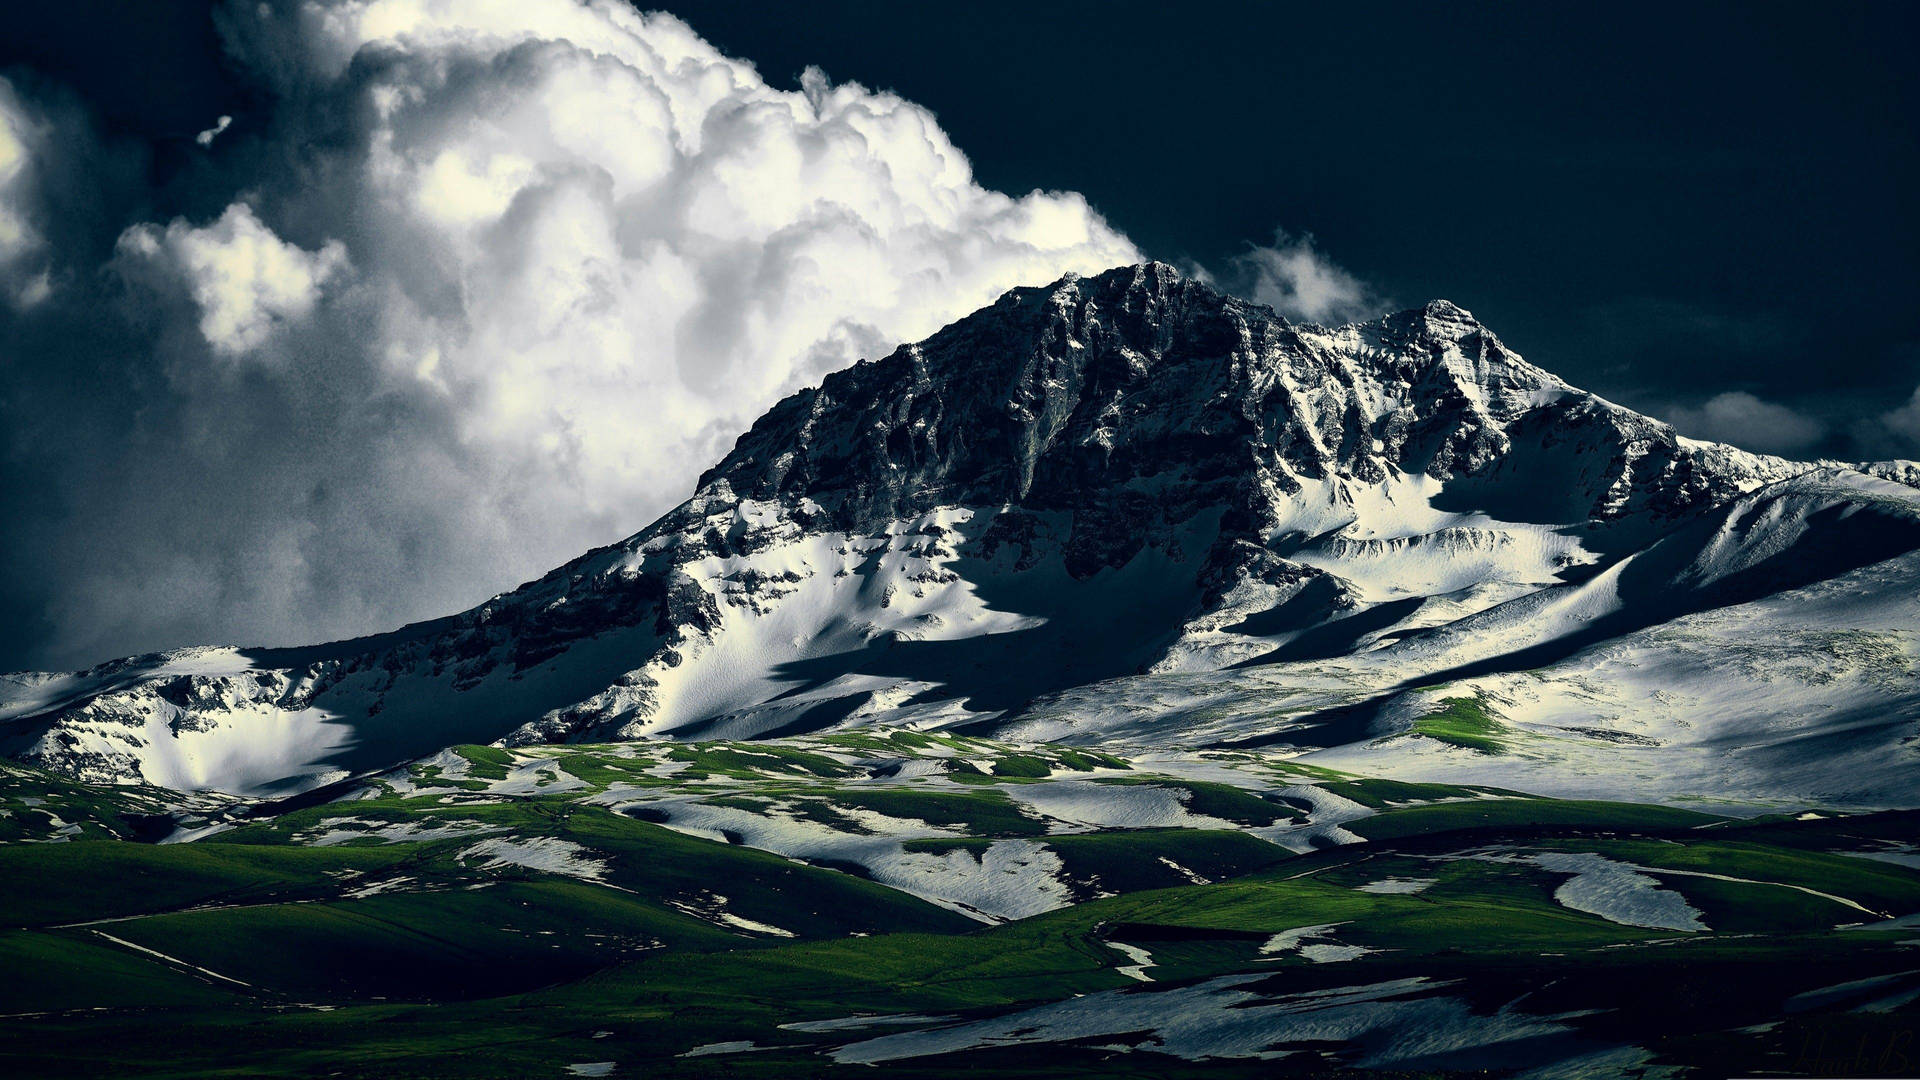 Armenia Mount Aragats